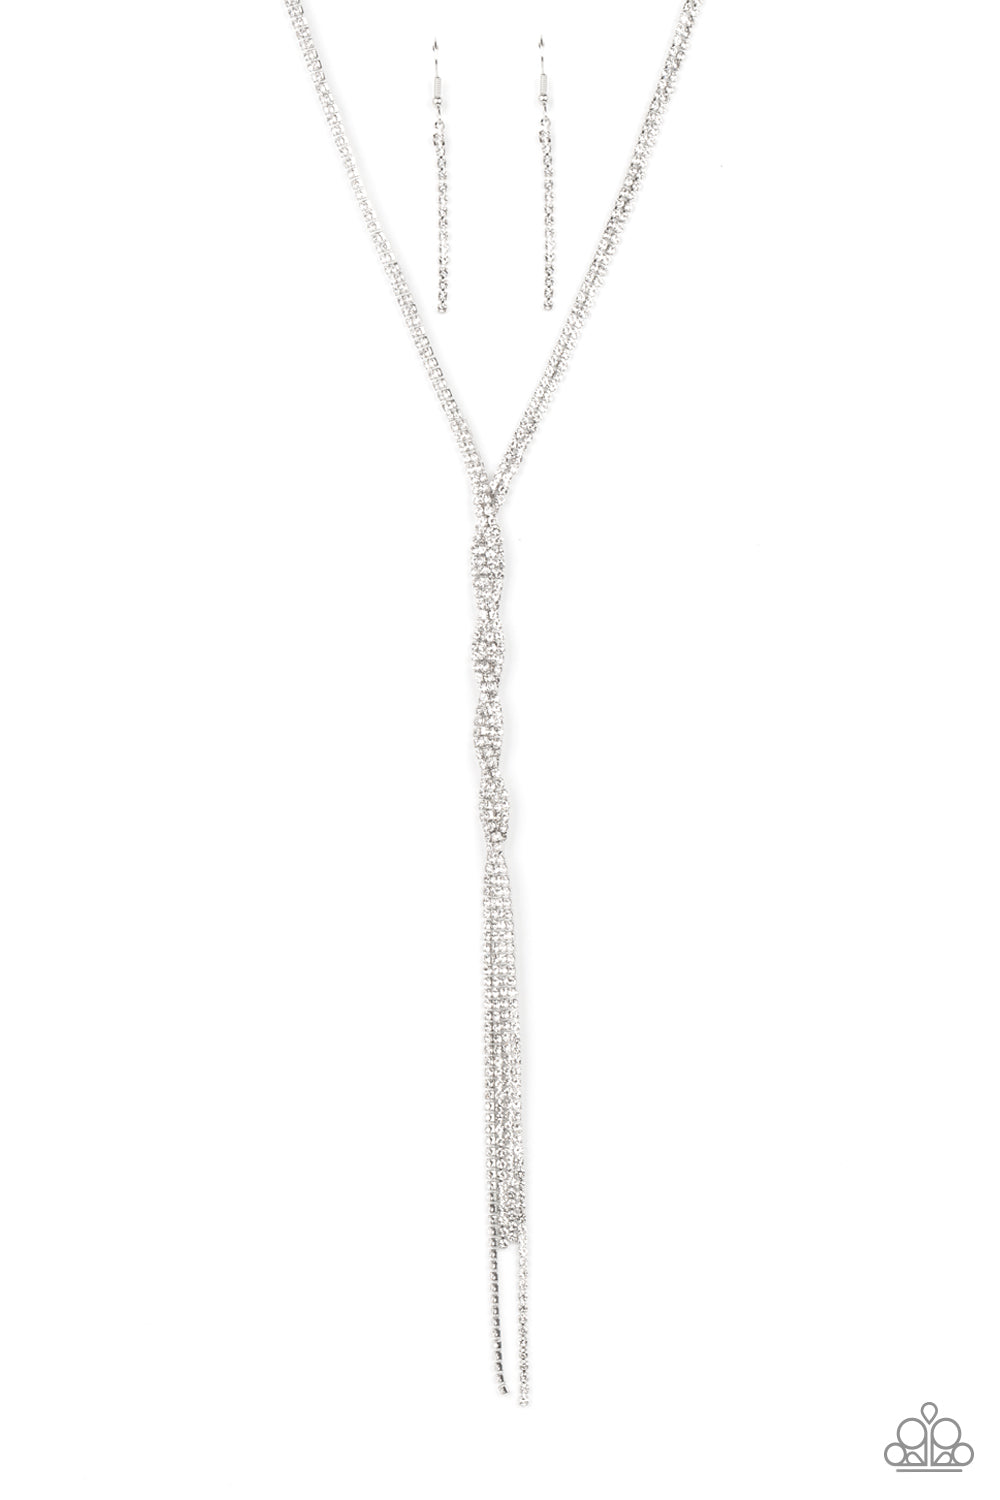 Impressively Icy White Necklace Paparazzi $5 Jewelry. Get Free Shipping. #P2RE-WTXX-595XX